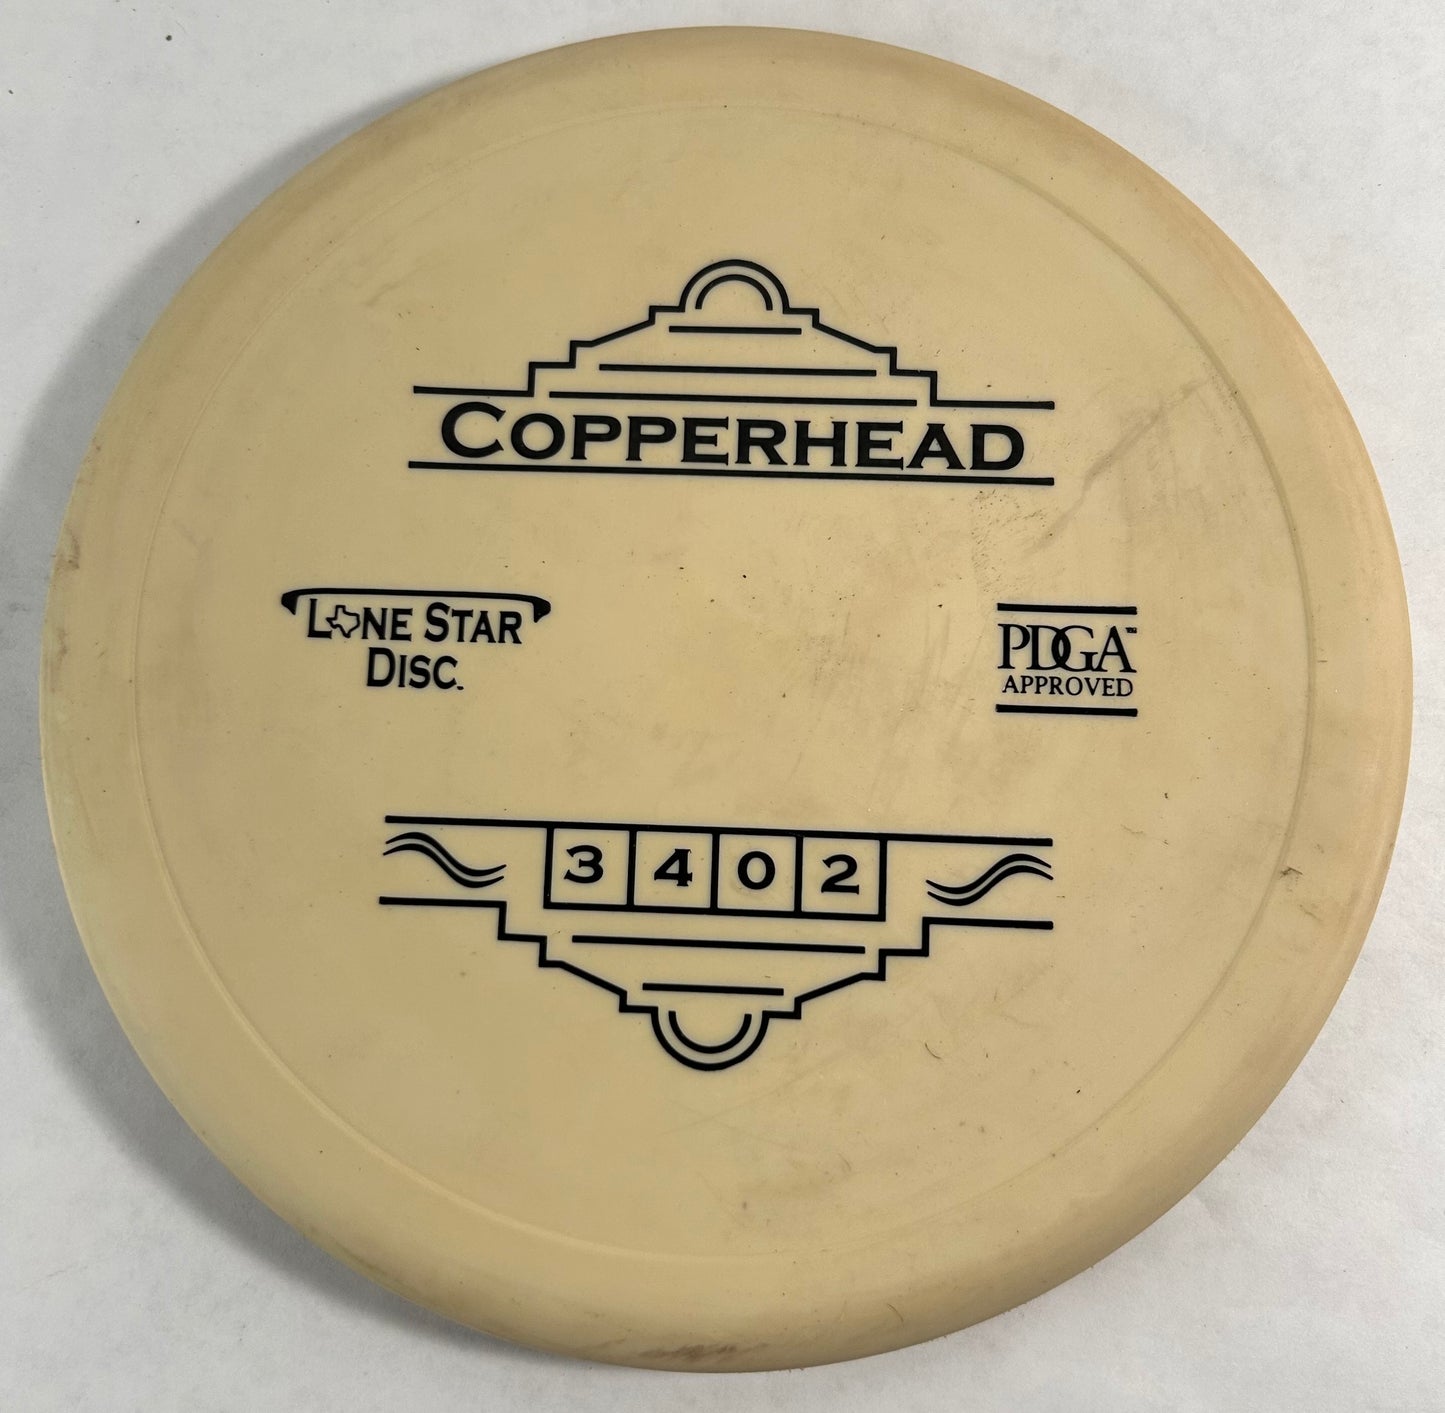 Lone Star Discs Copperhead